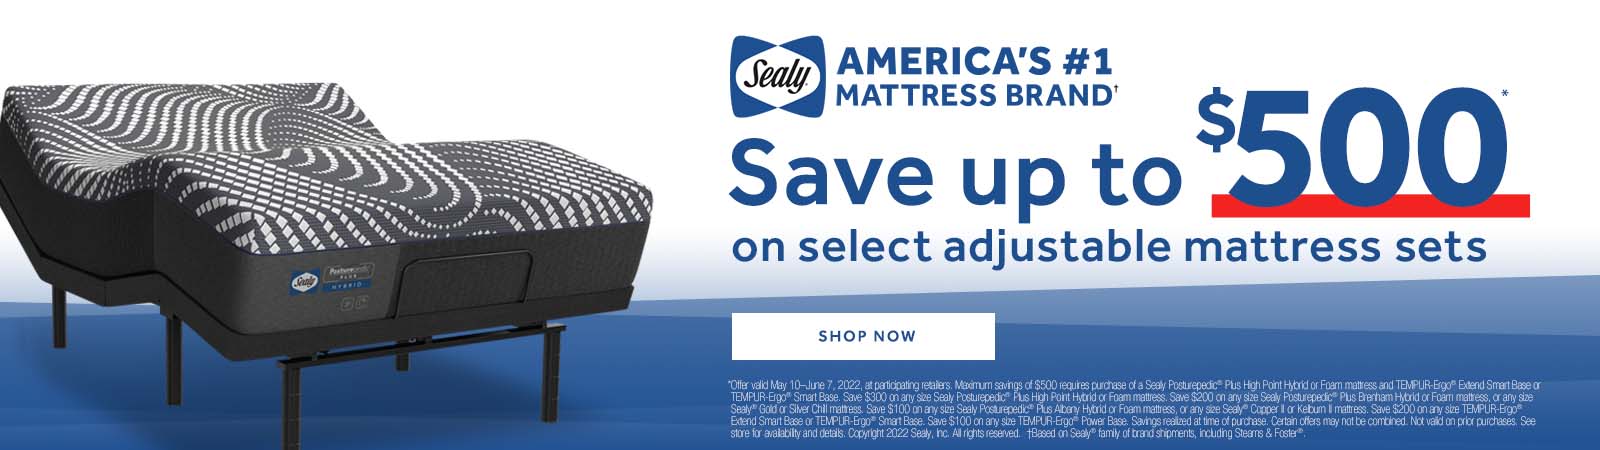 Save up to $500 on Adjustable Mattress Sets